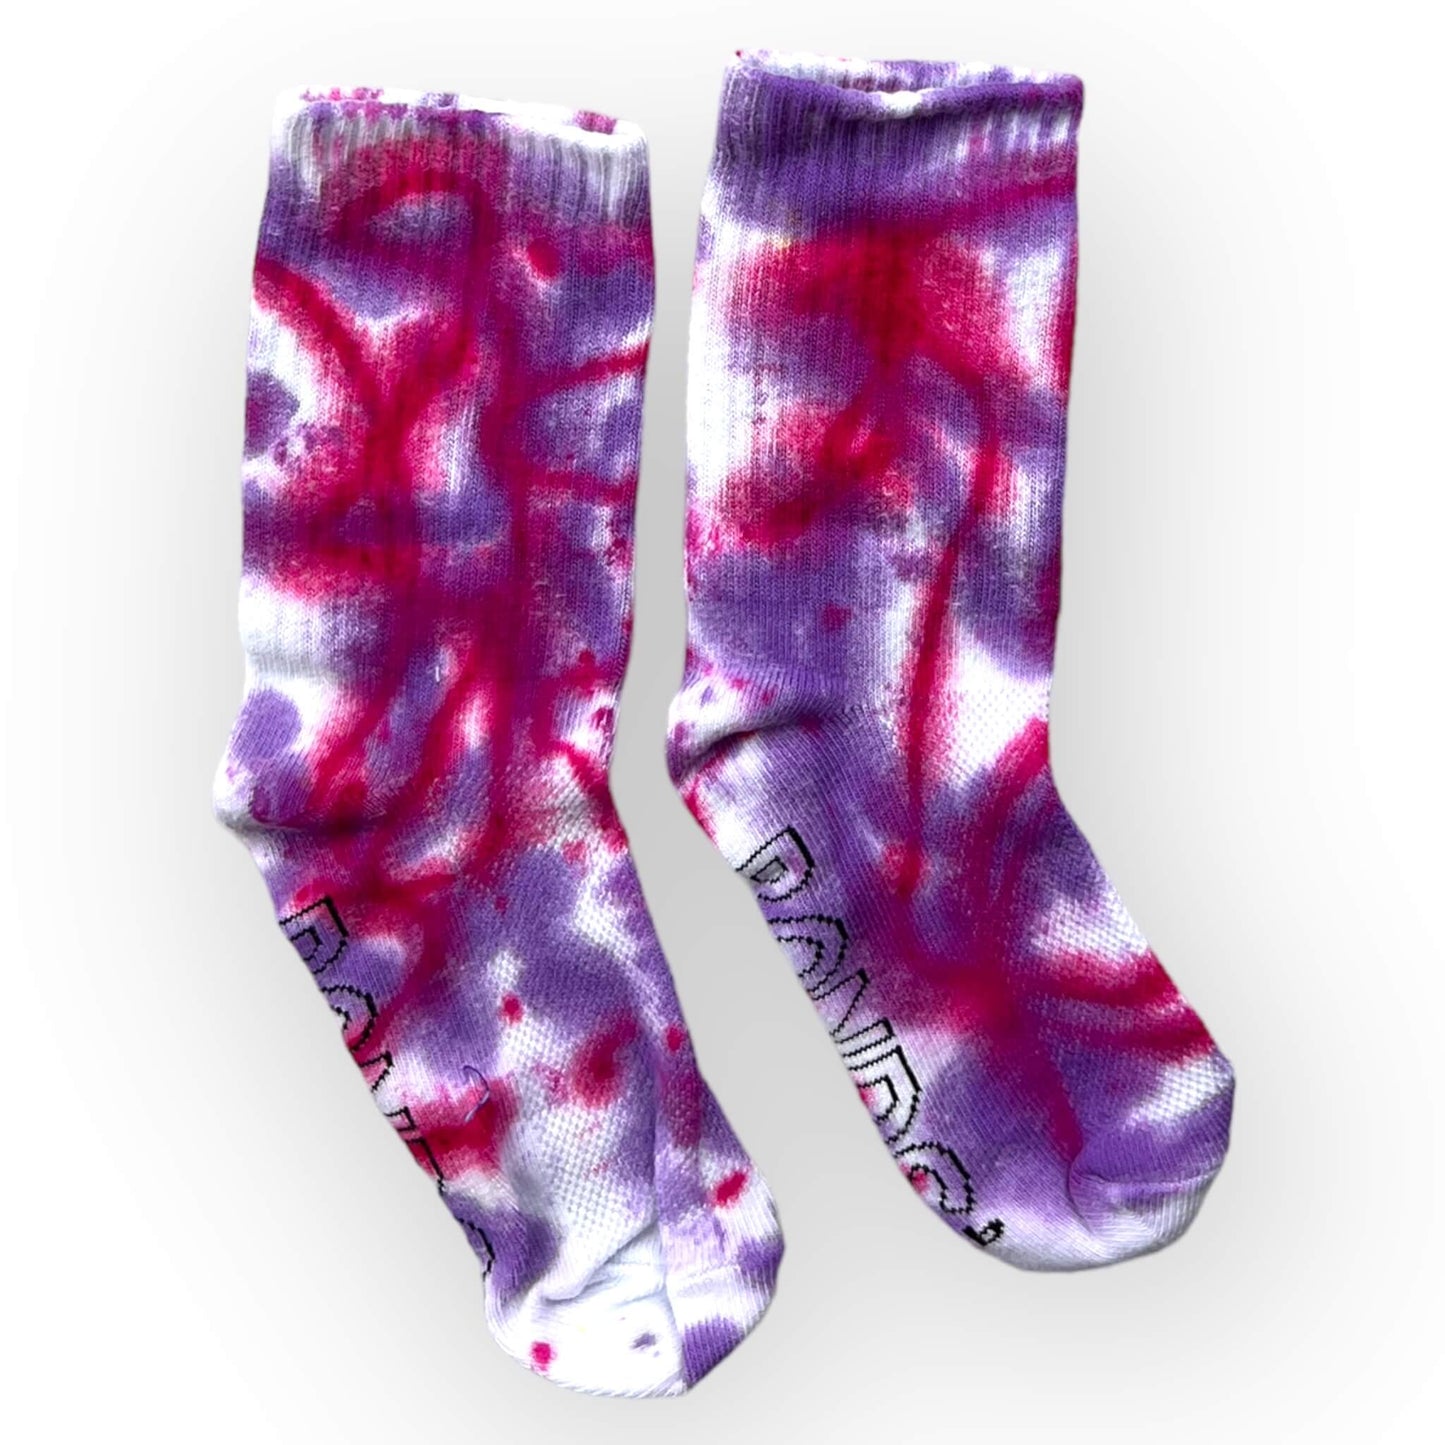 Tie Dye Socks - Size 9-12 (5-8 yrs)